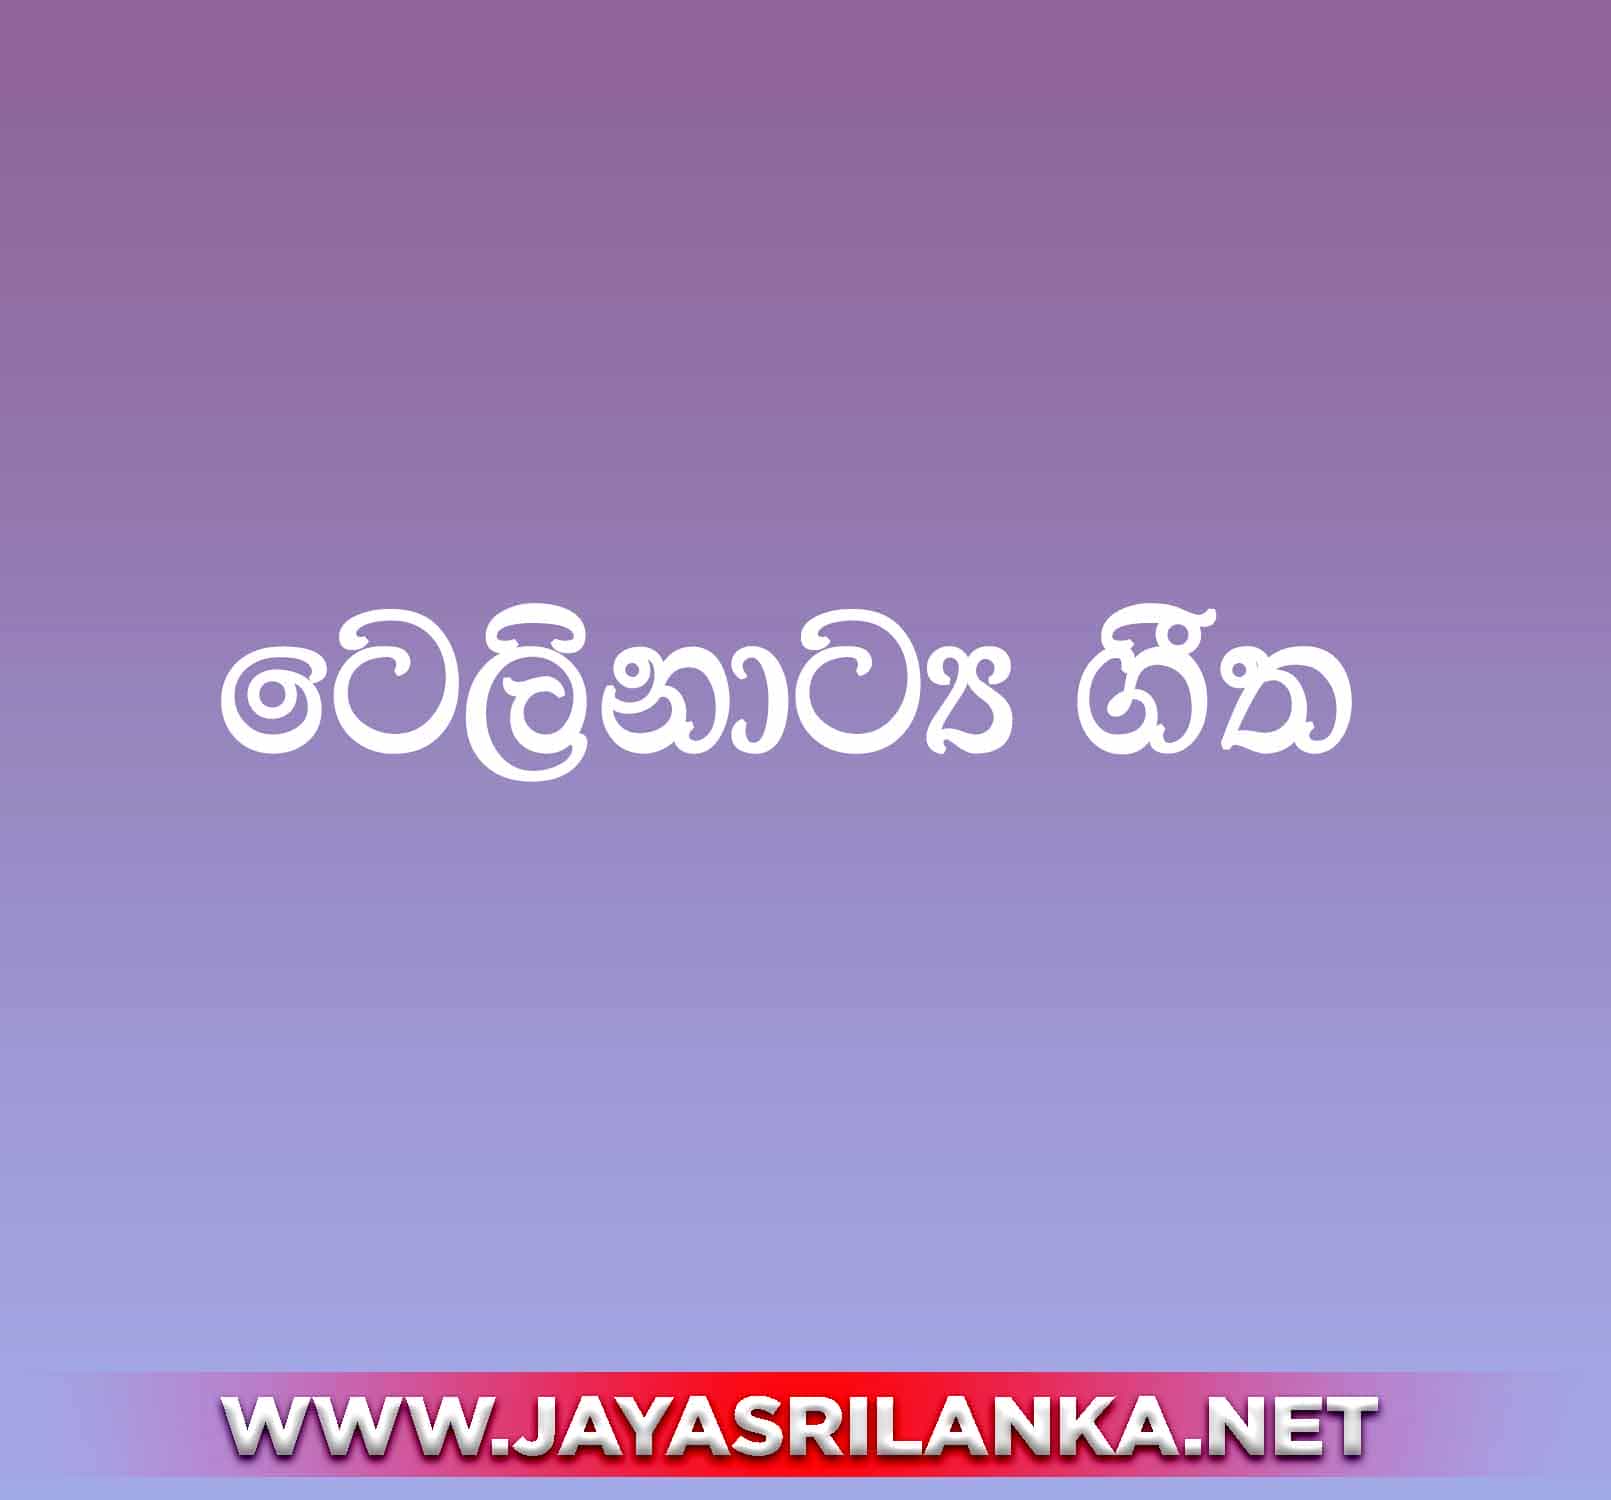 Awa Se Ae Dura Giya (Waramali) - Sinhala Teledrama Songs mp3 Image